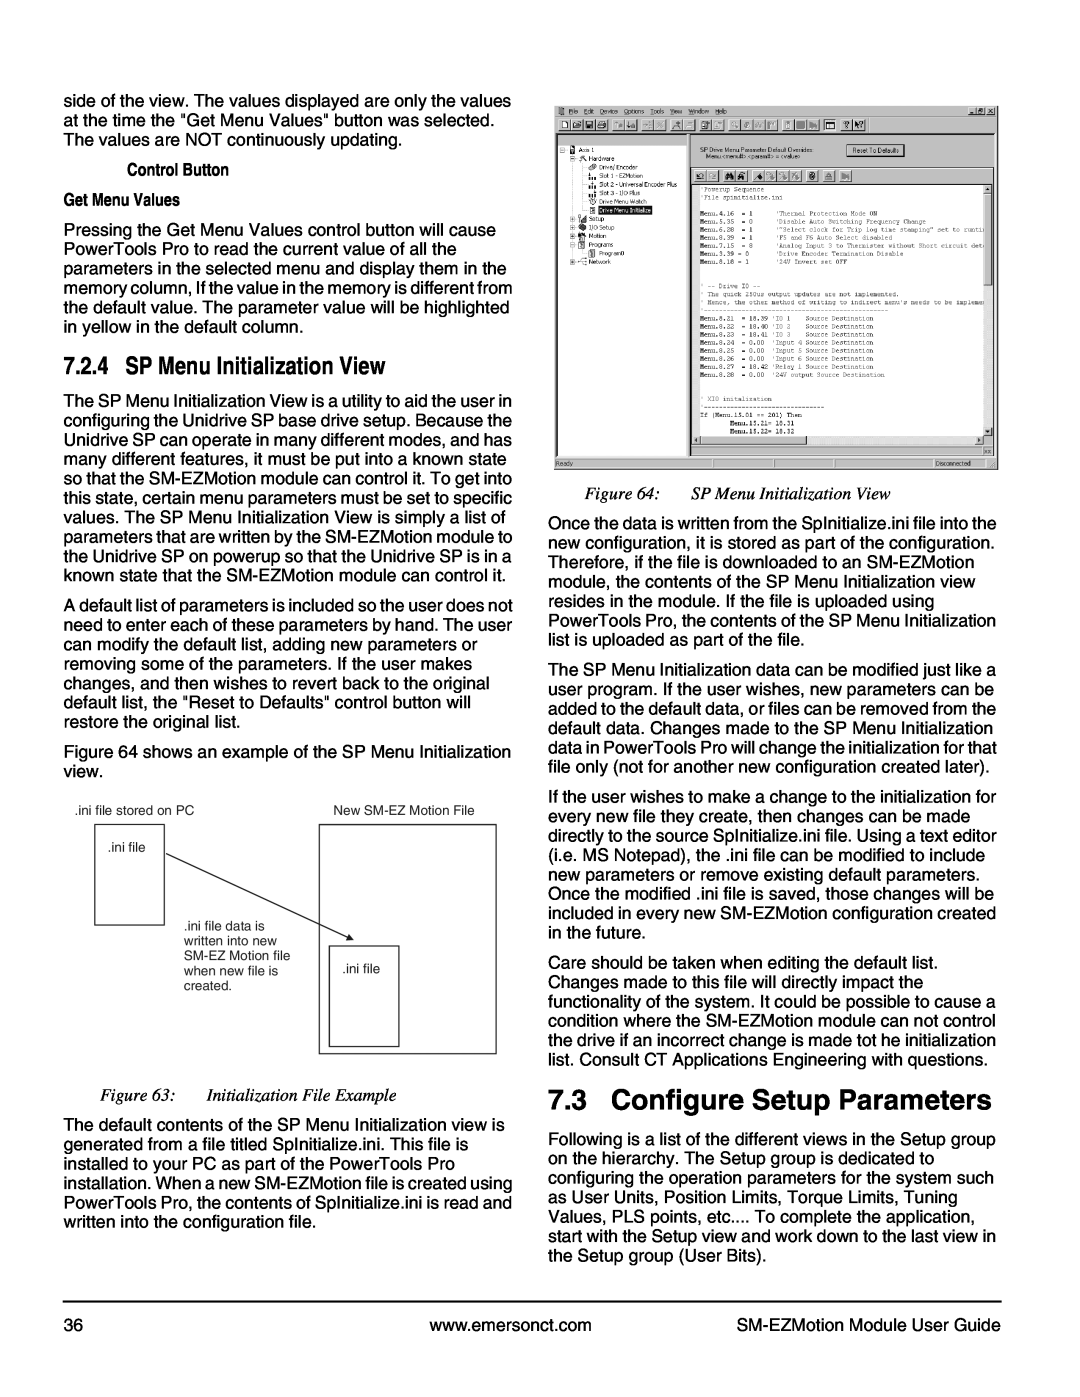 Emerson P/N 400361-00 manual Configure Setup Parameters, SP Menu Initialization View, Initialization File Example 